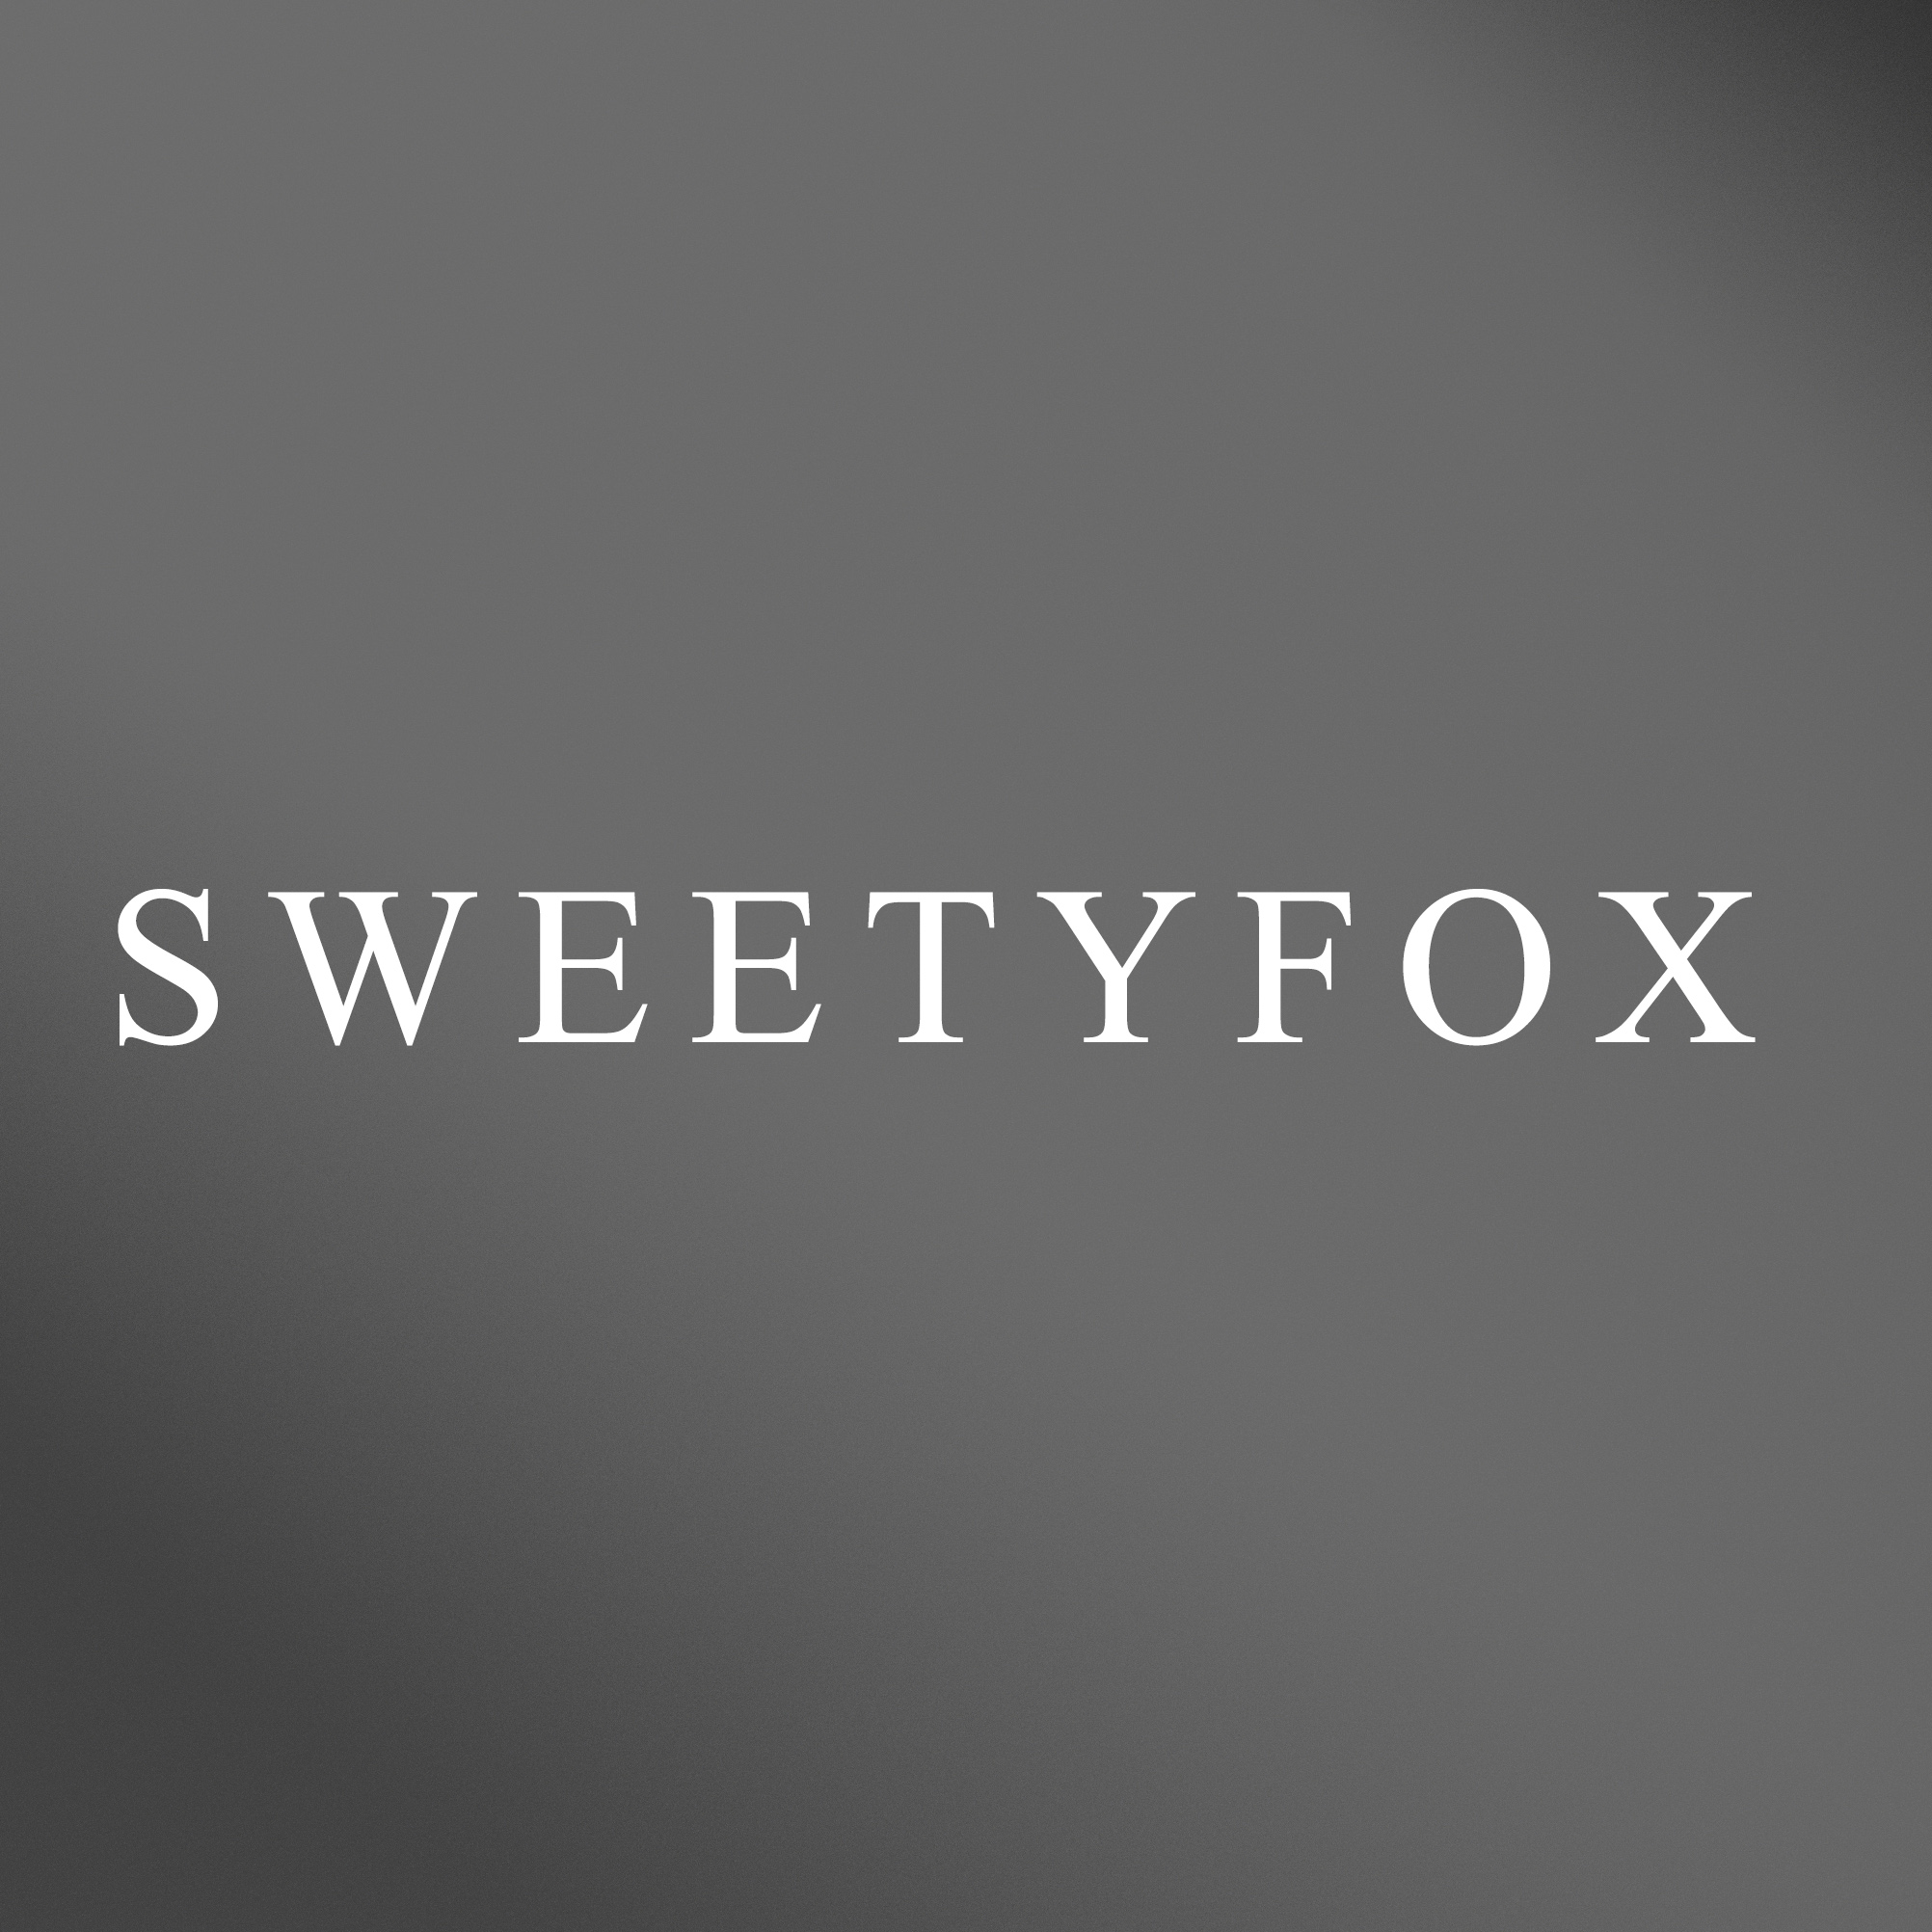  SWEETYFOX品牌店